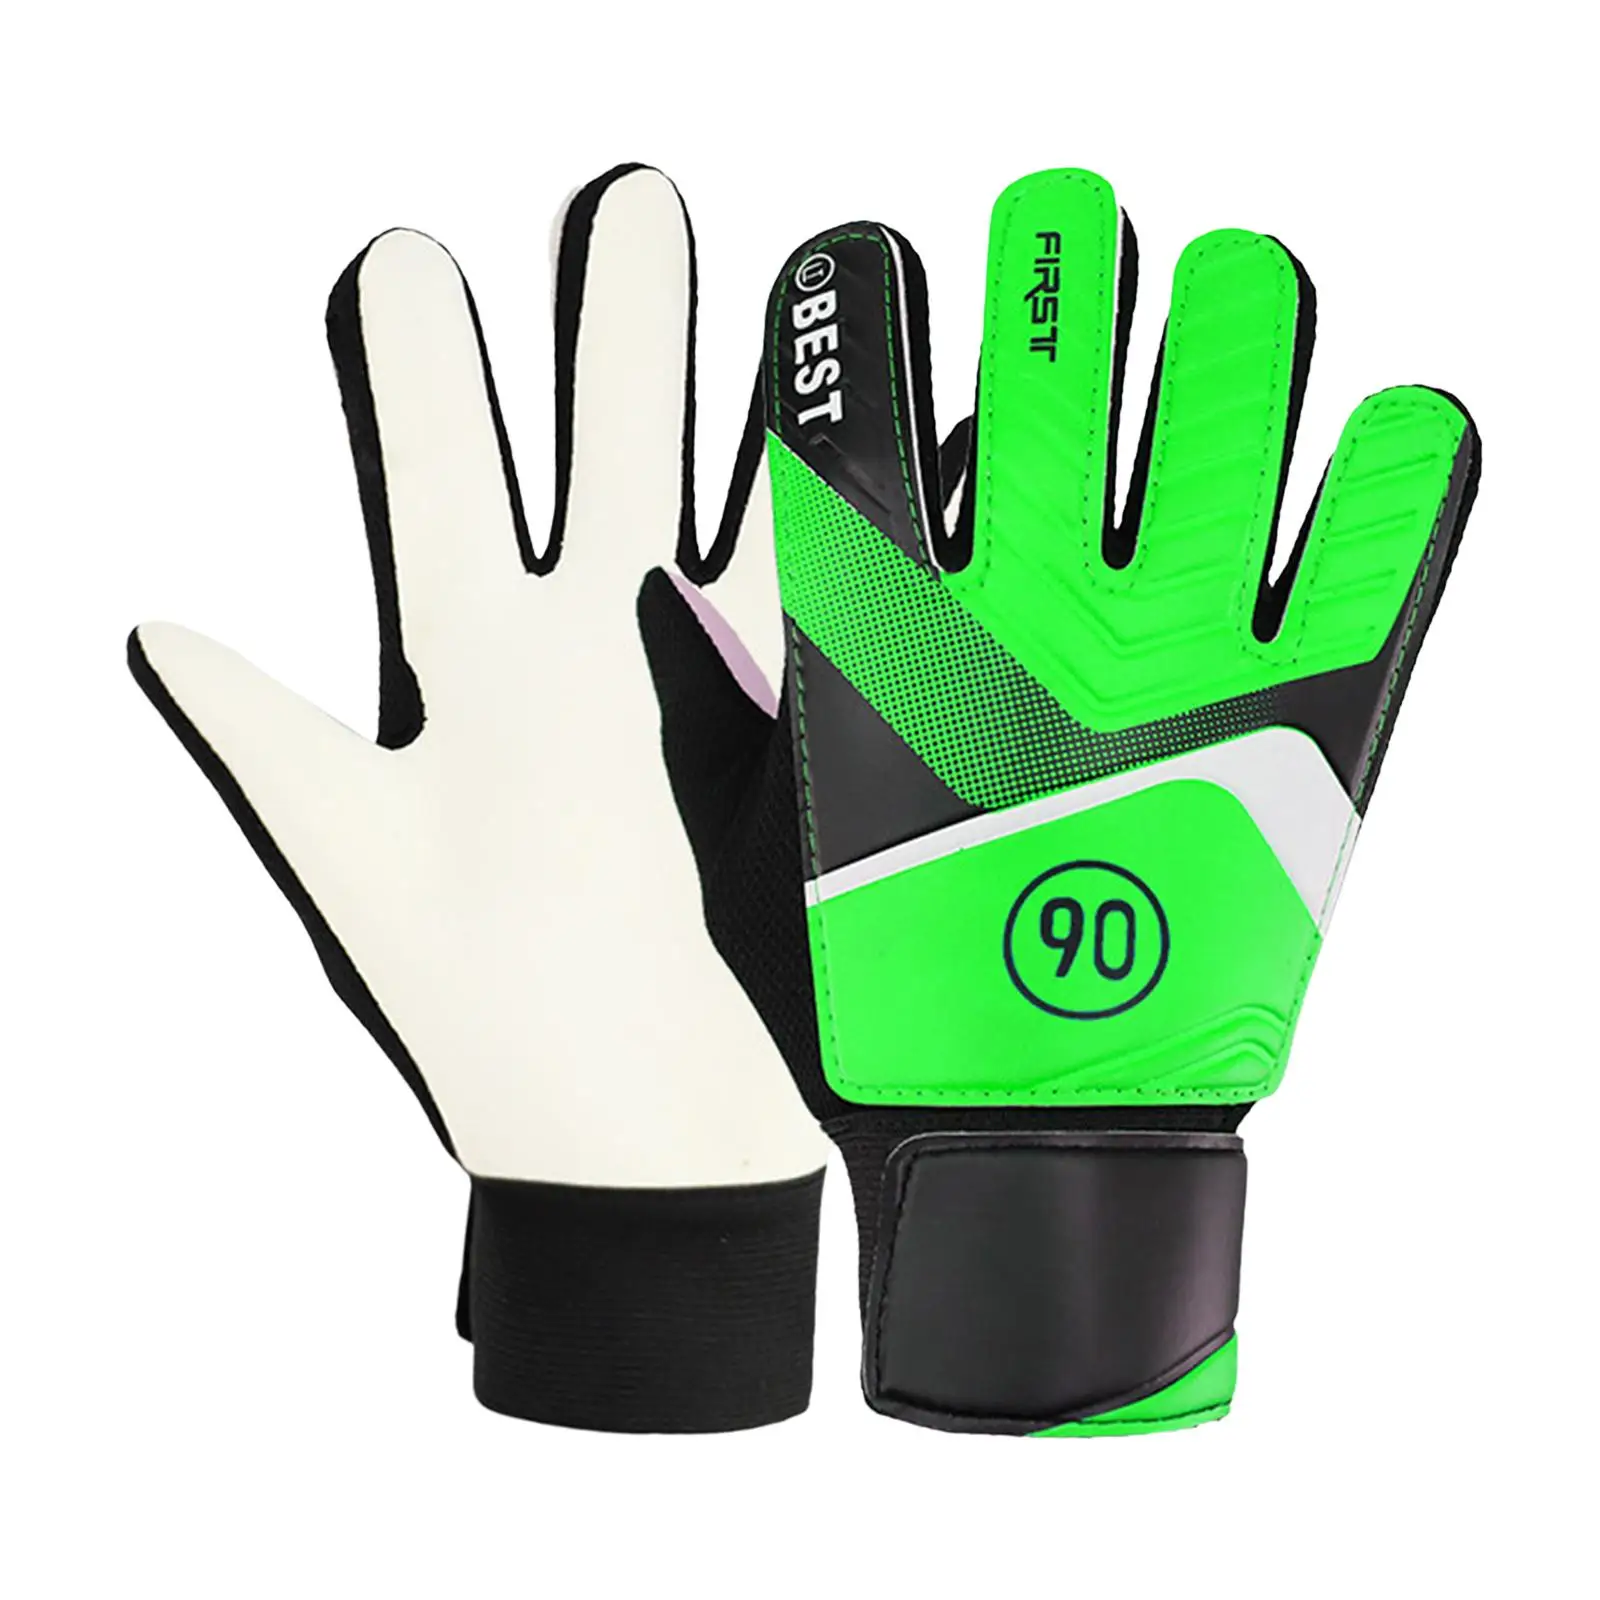 Goalie Goalkeeper Gloves Professional Goalkeeper Gloves, Soccer Football Training Goalkeeper Gloves Finger Protector